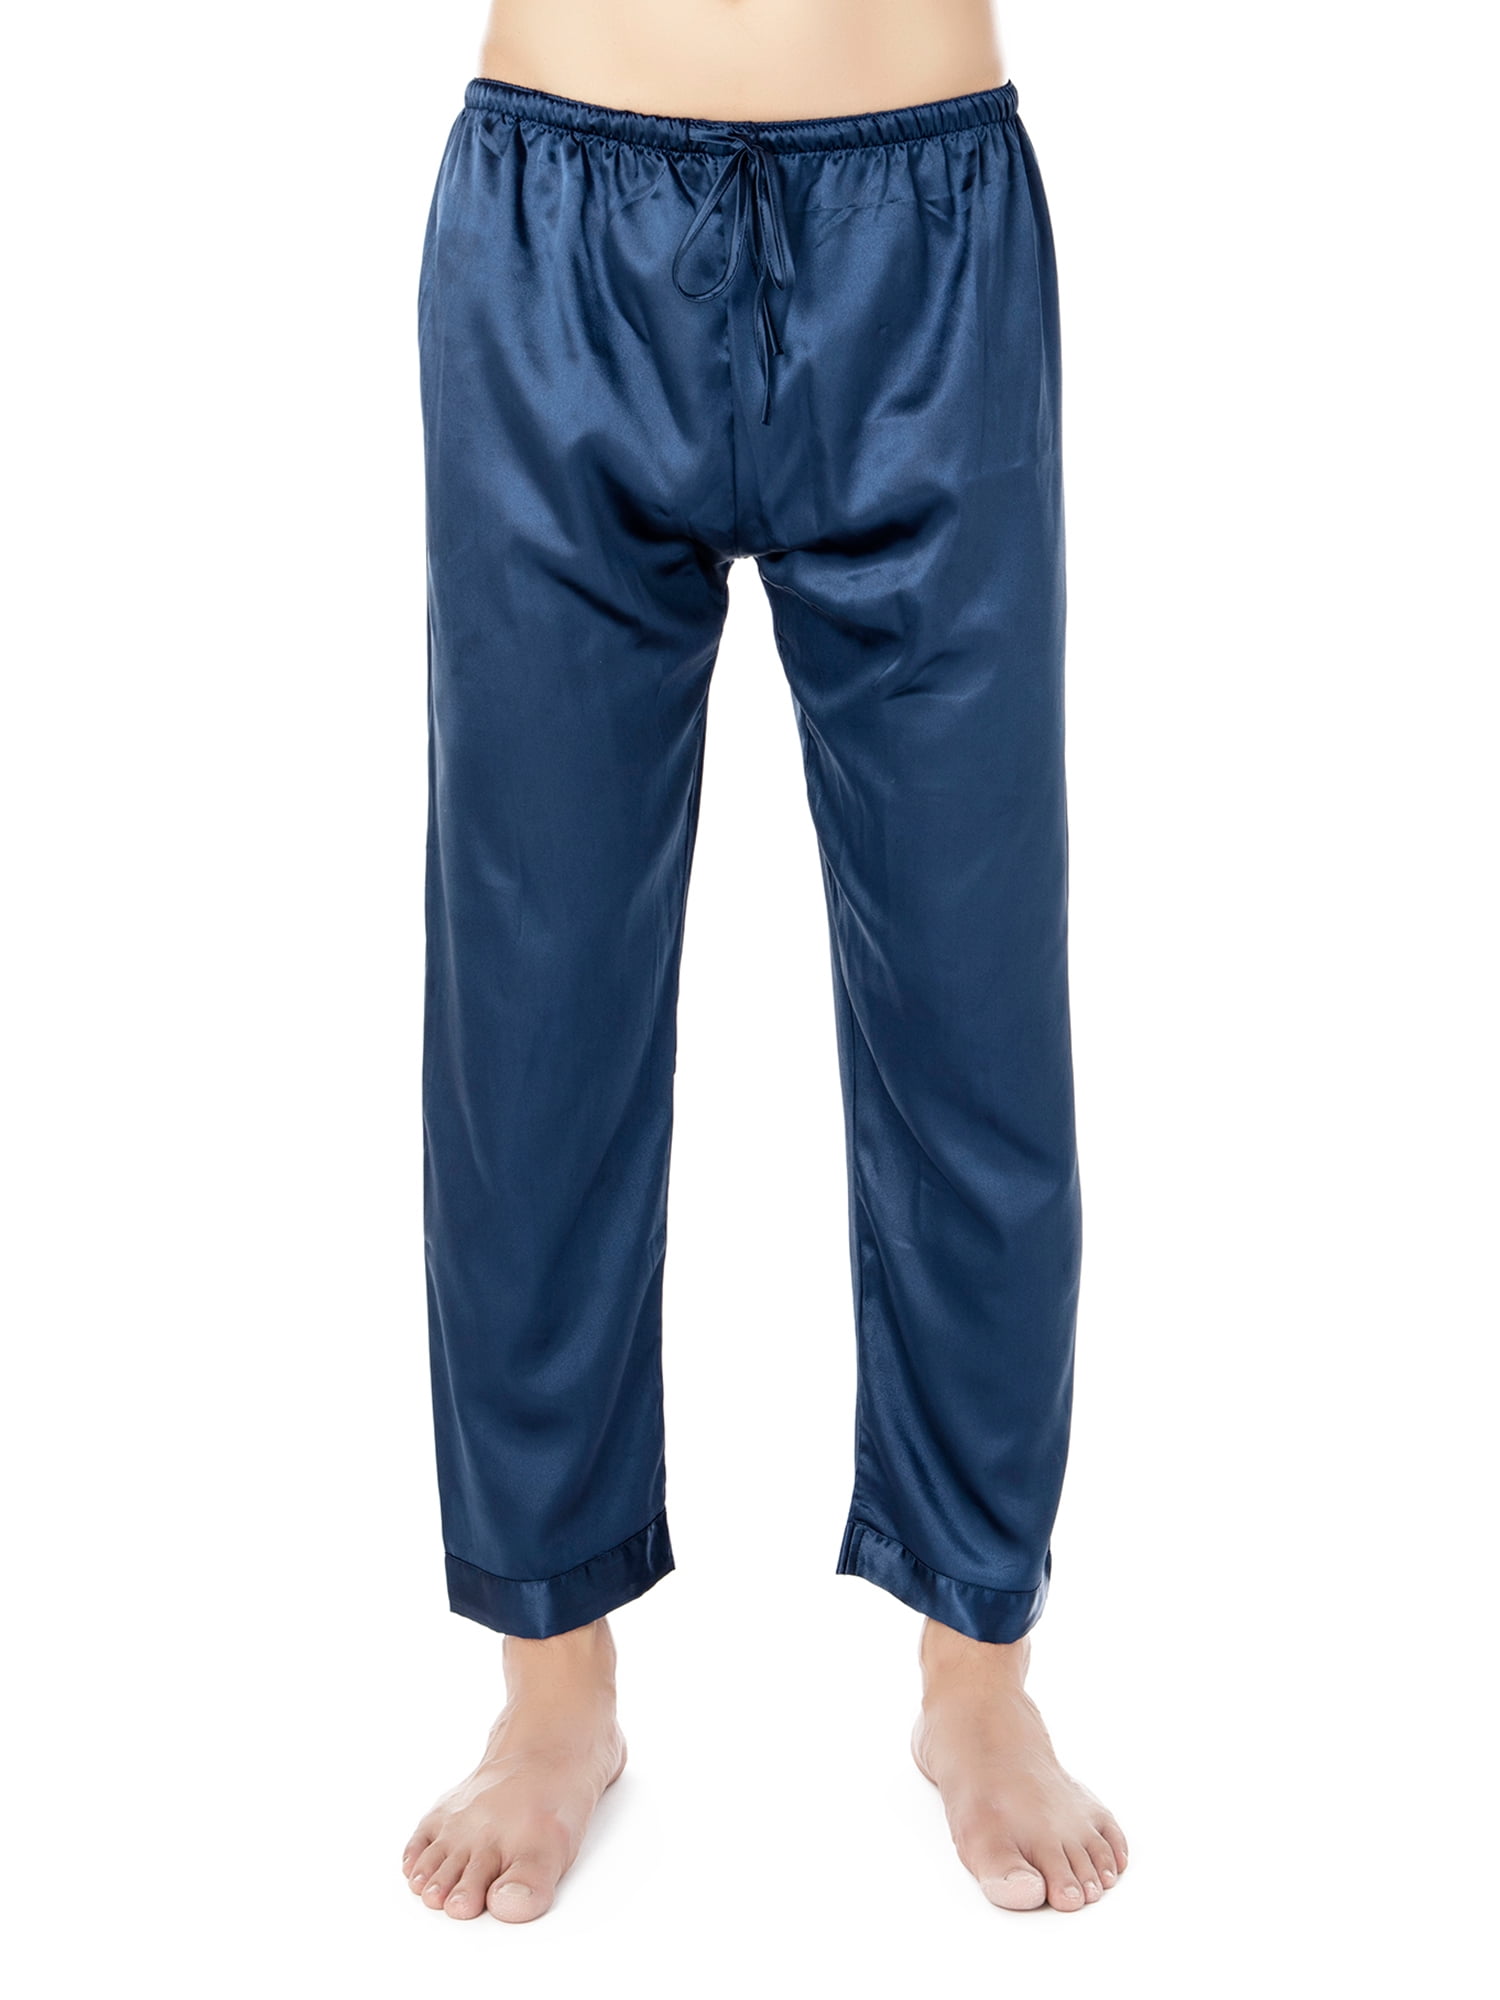 SHCKE Pajama Pants for Men Silk Long Sleep Bottoms Pj Lounge Pant with  Drawstring